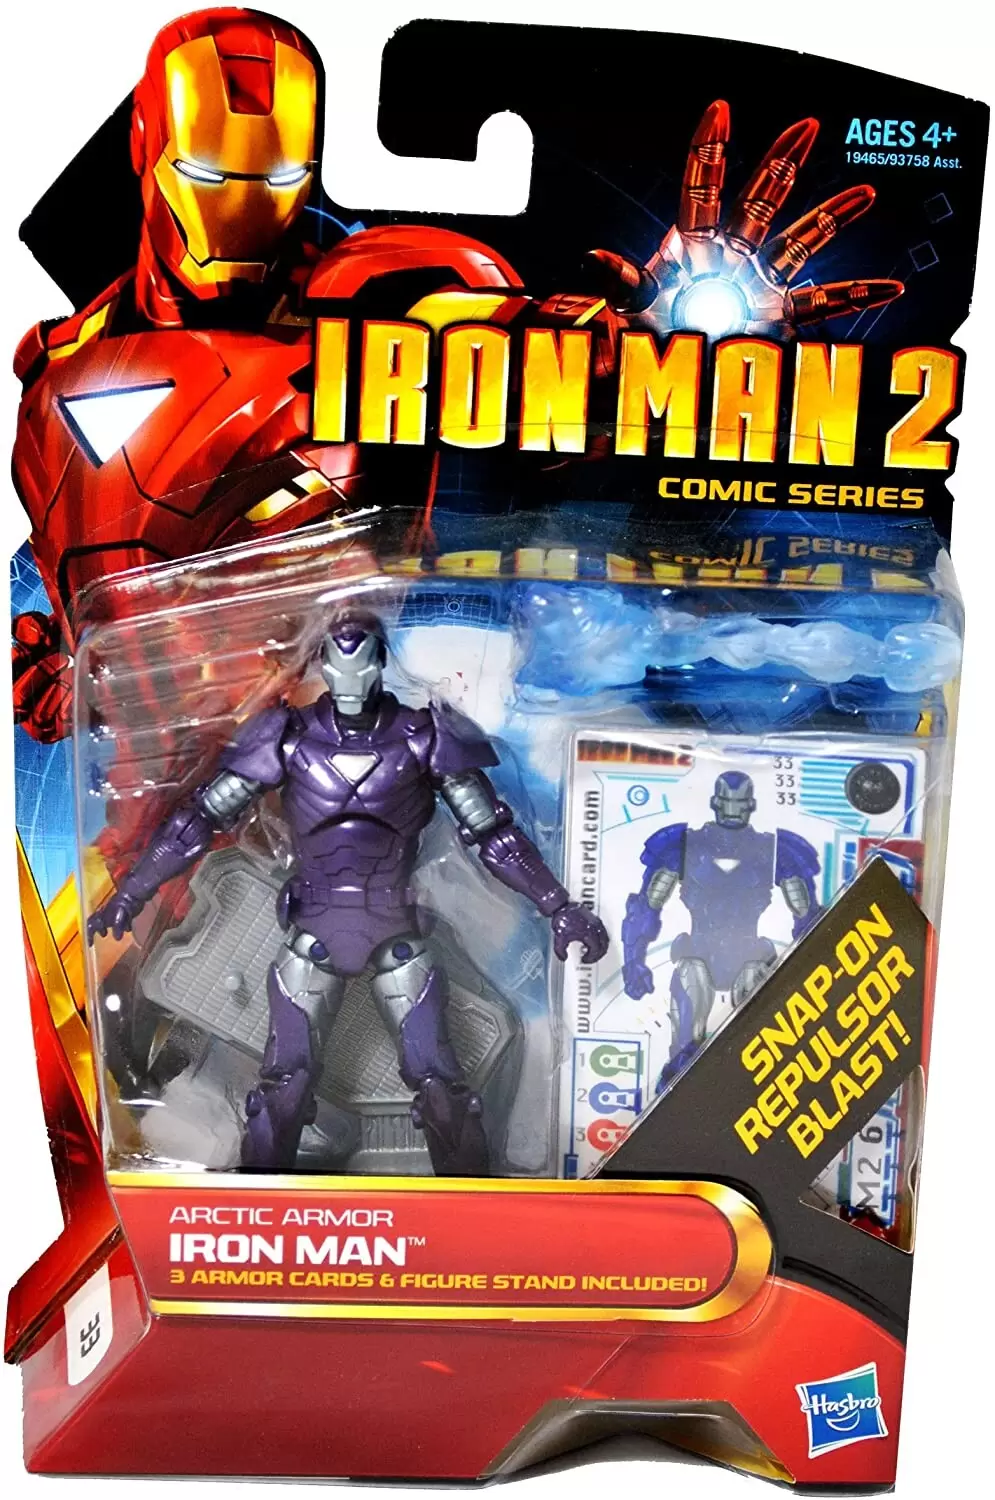 Iron Man 2 - Movie & Comic Series - Iron Man Arctic Armor